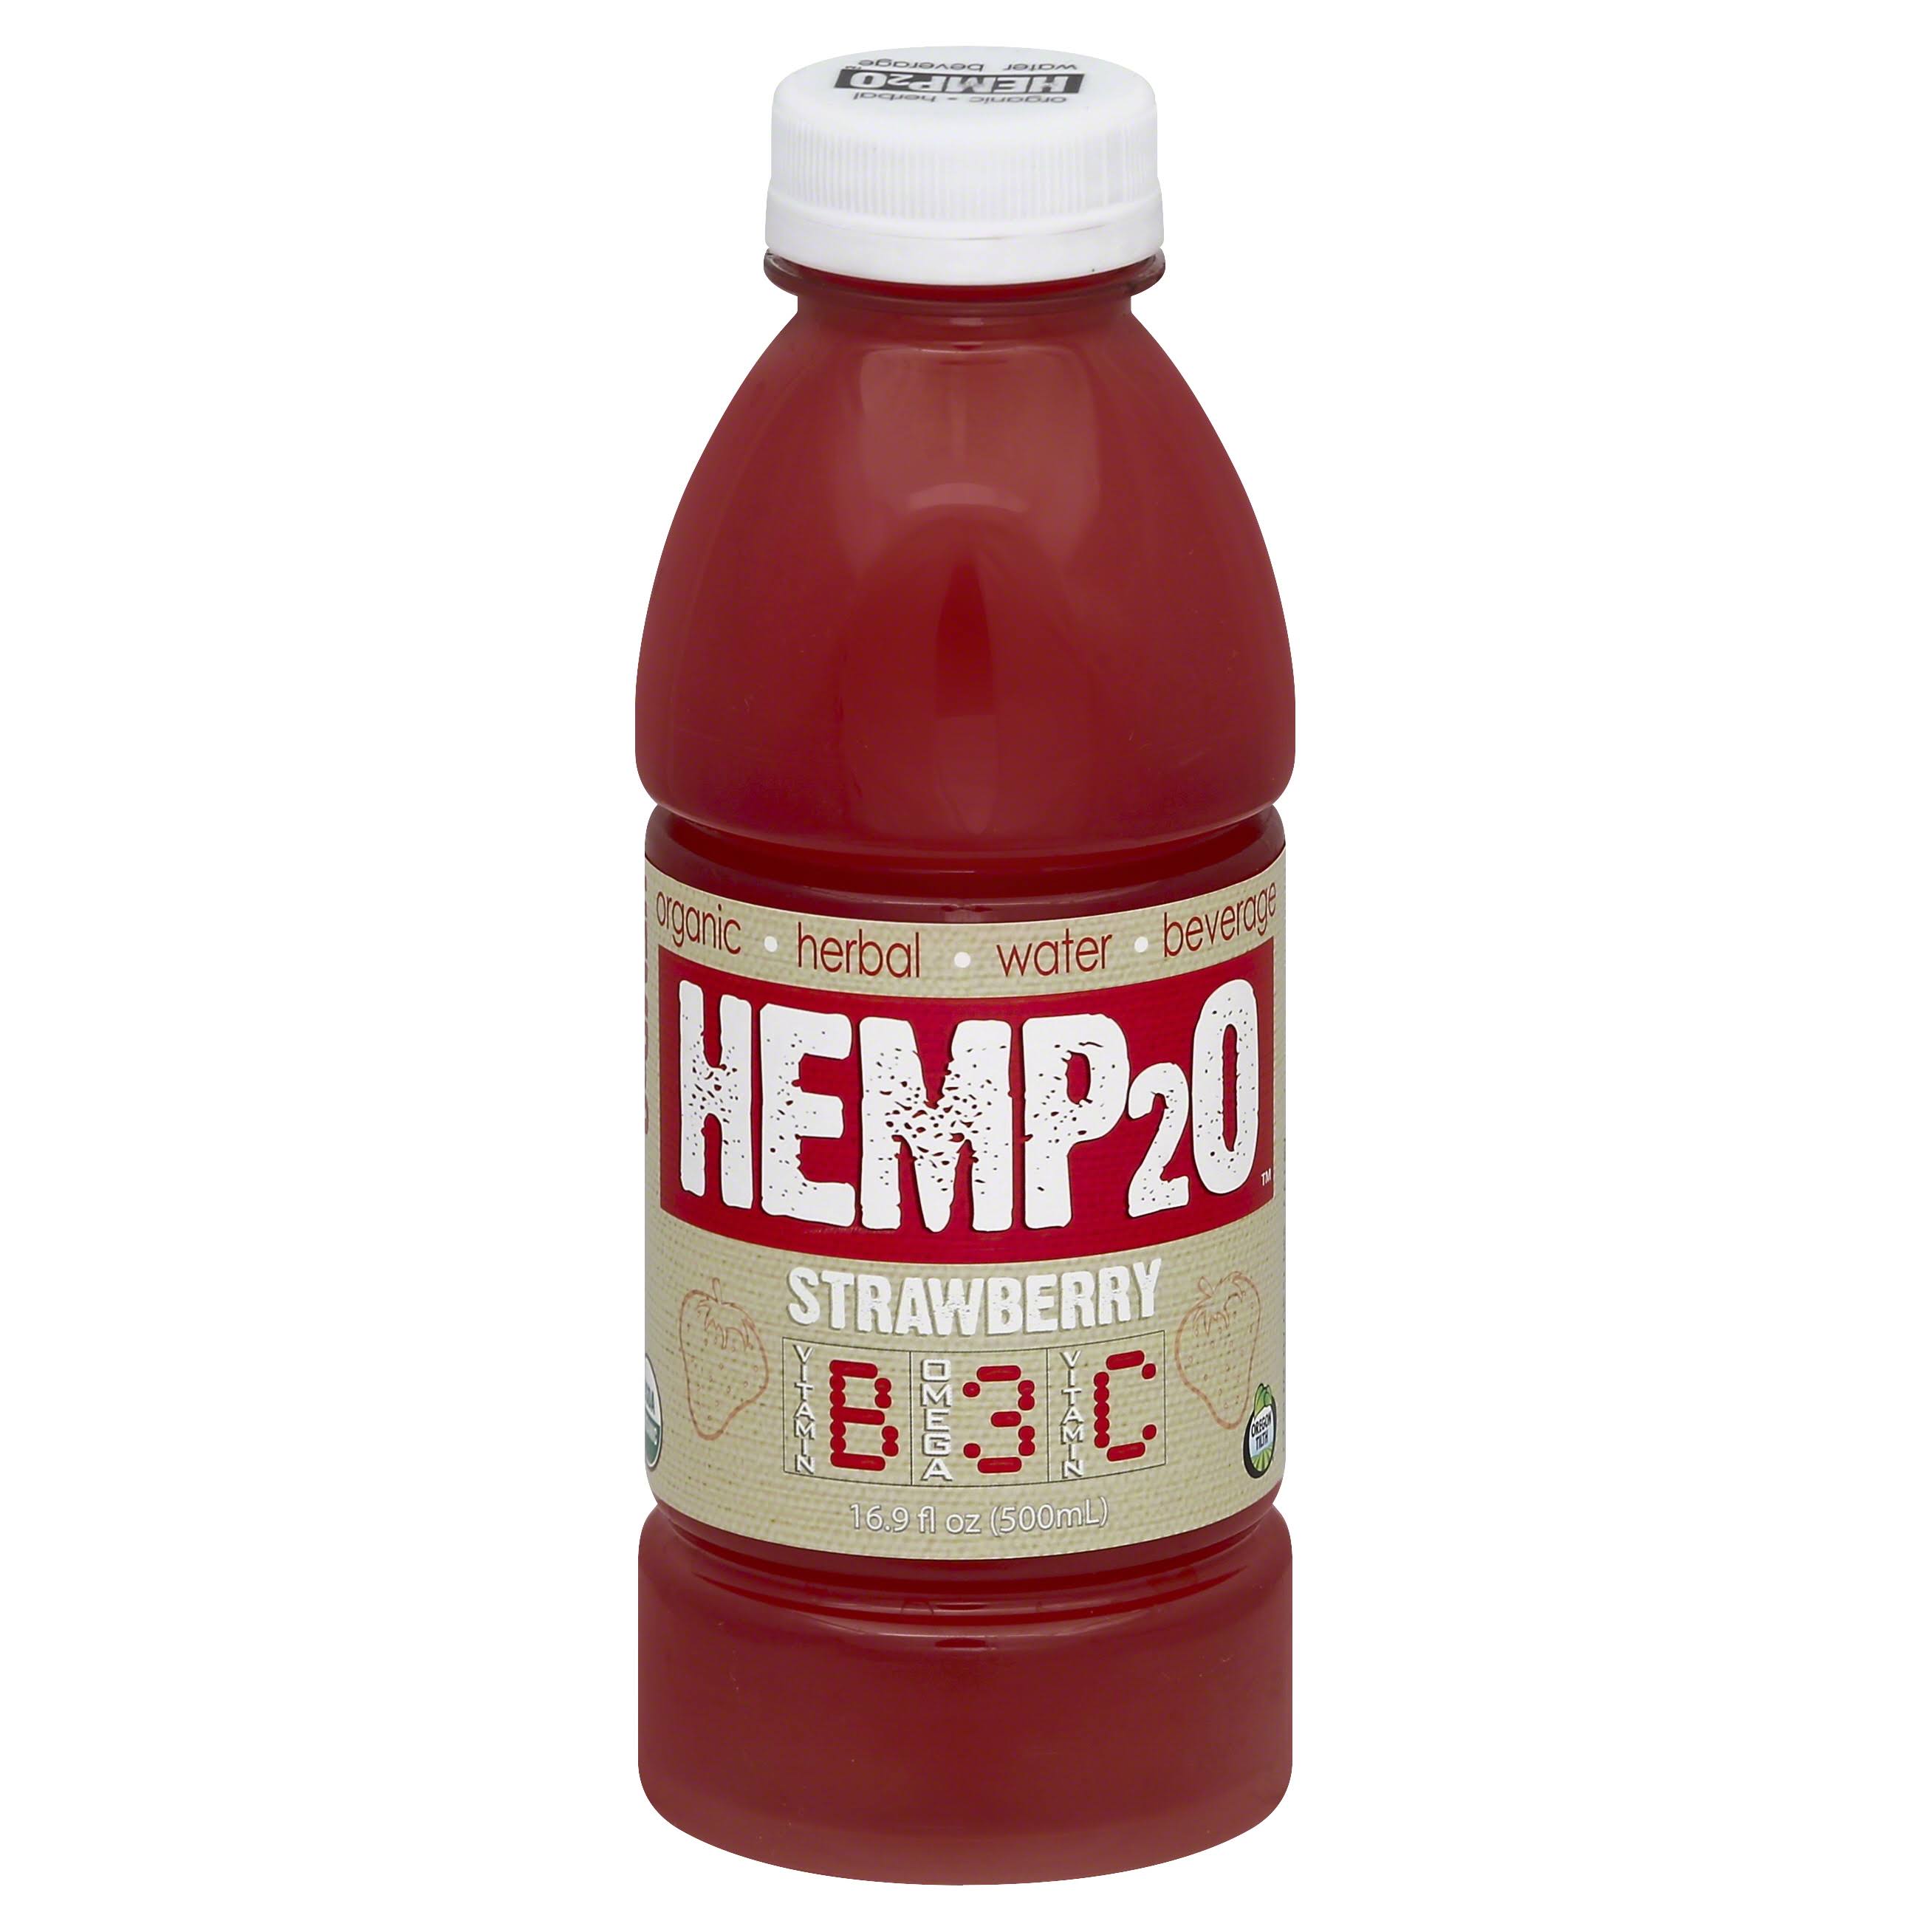 Hemp2o Organic Herbal Water Beverage - Strawberry, 16.9 fl oz